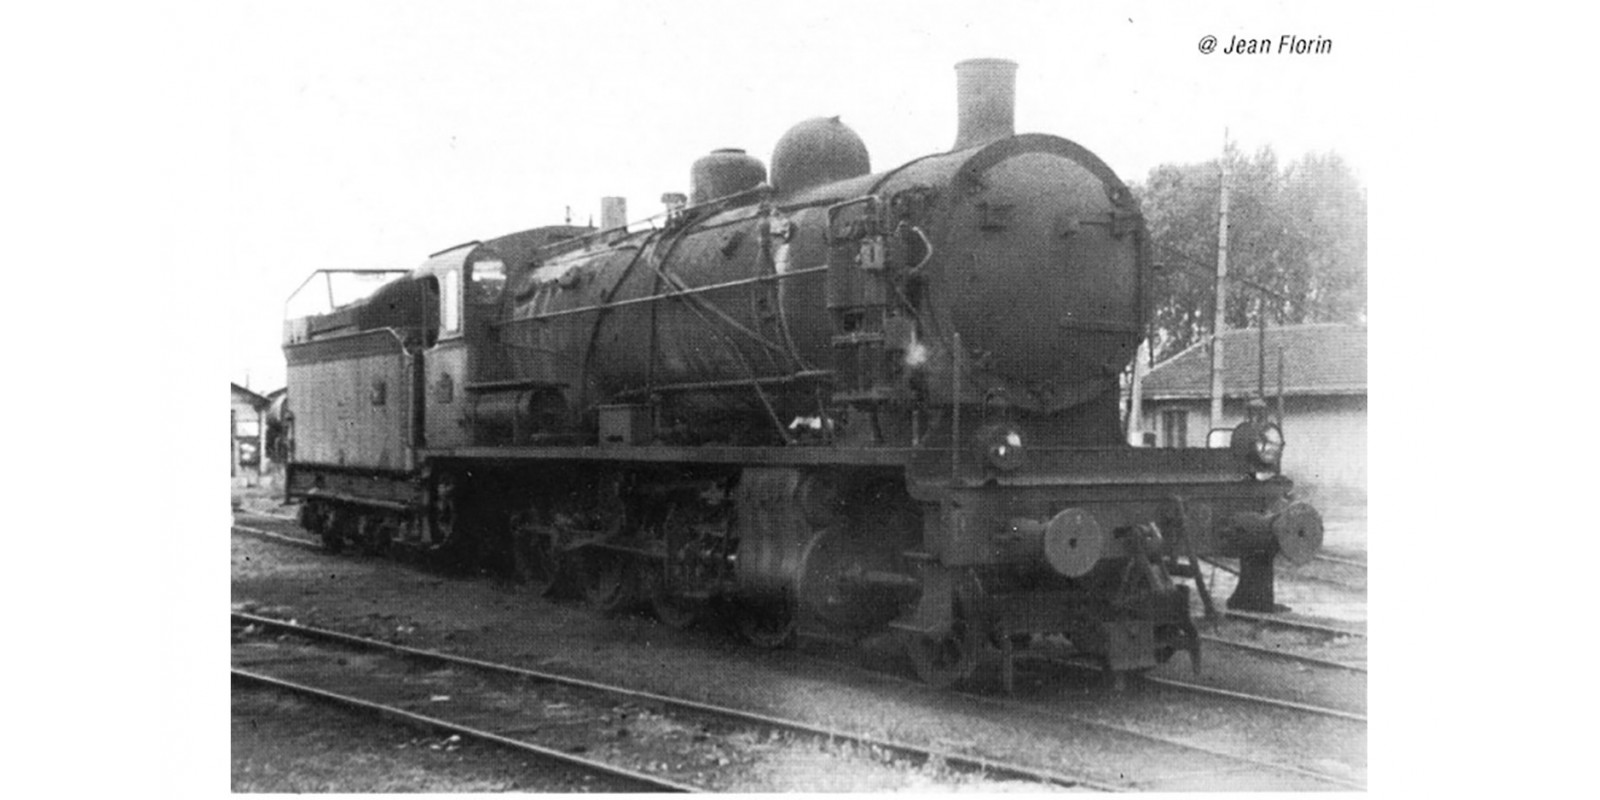 JO2405 SNCF, 140 C 70 + tender 18B 64, black